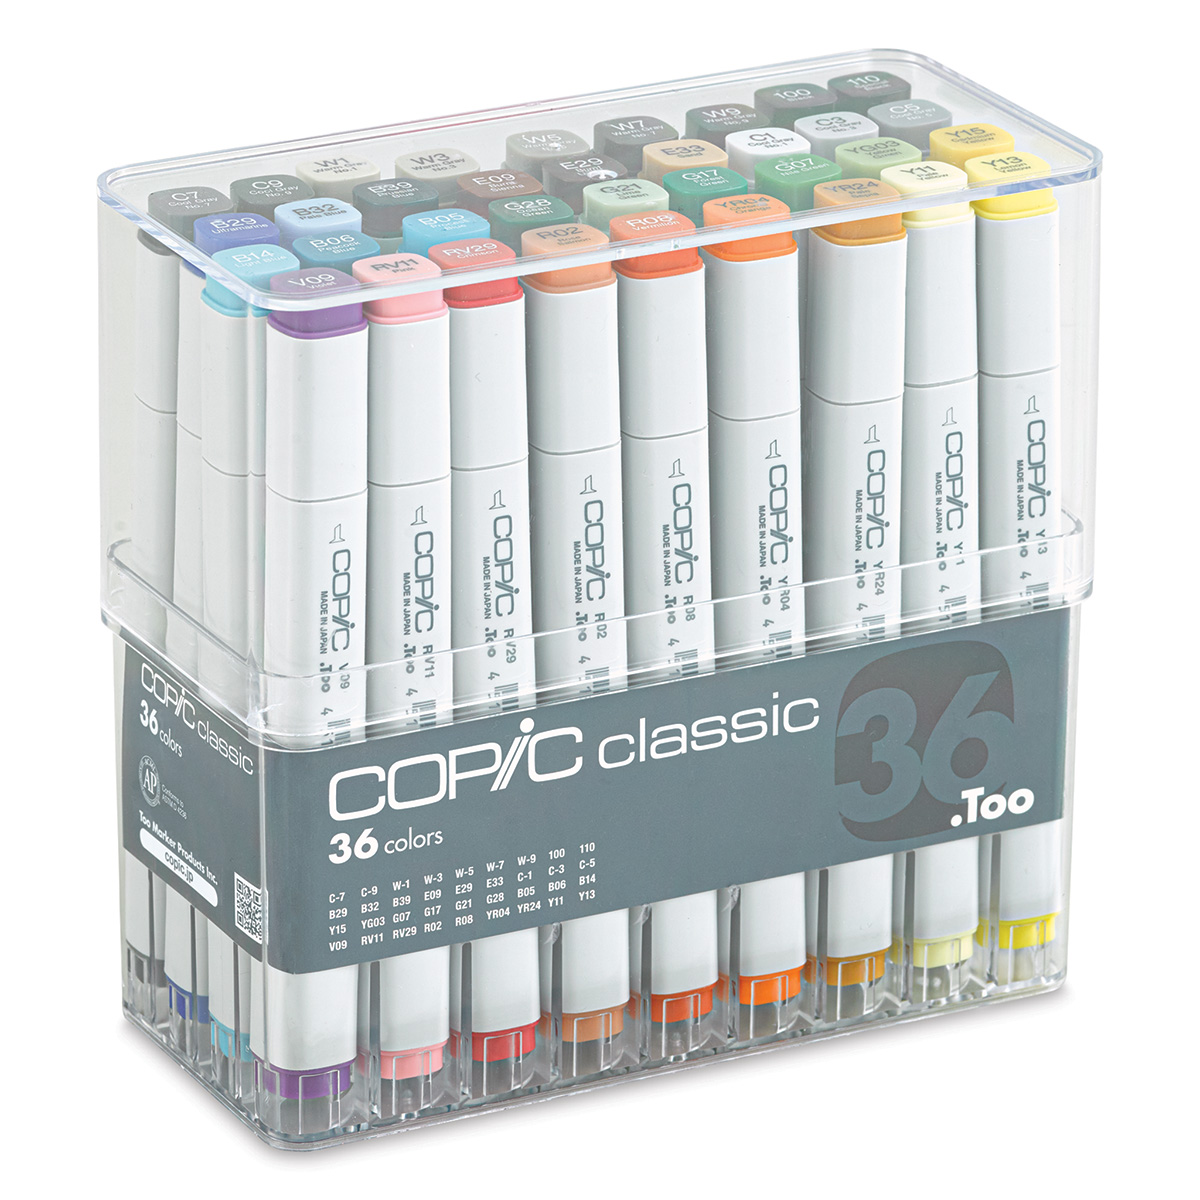 The original Copic marker - Copic Classic - COPIC Official Website